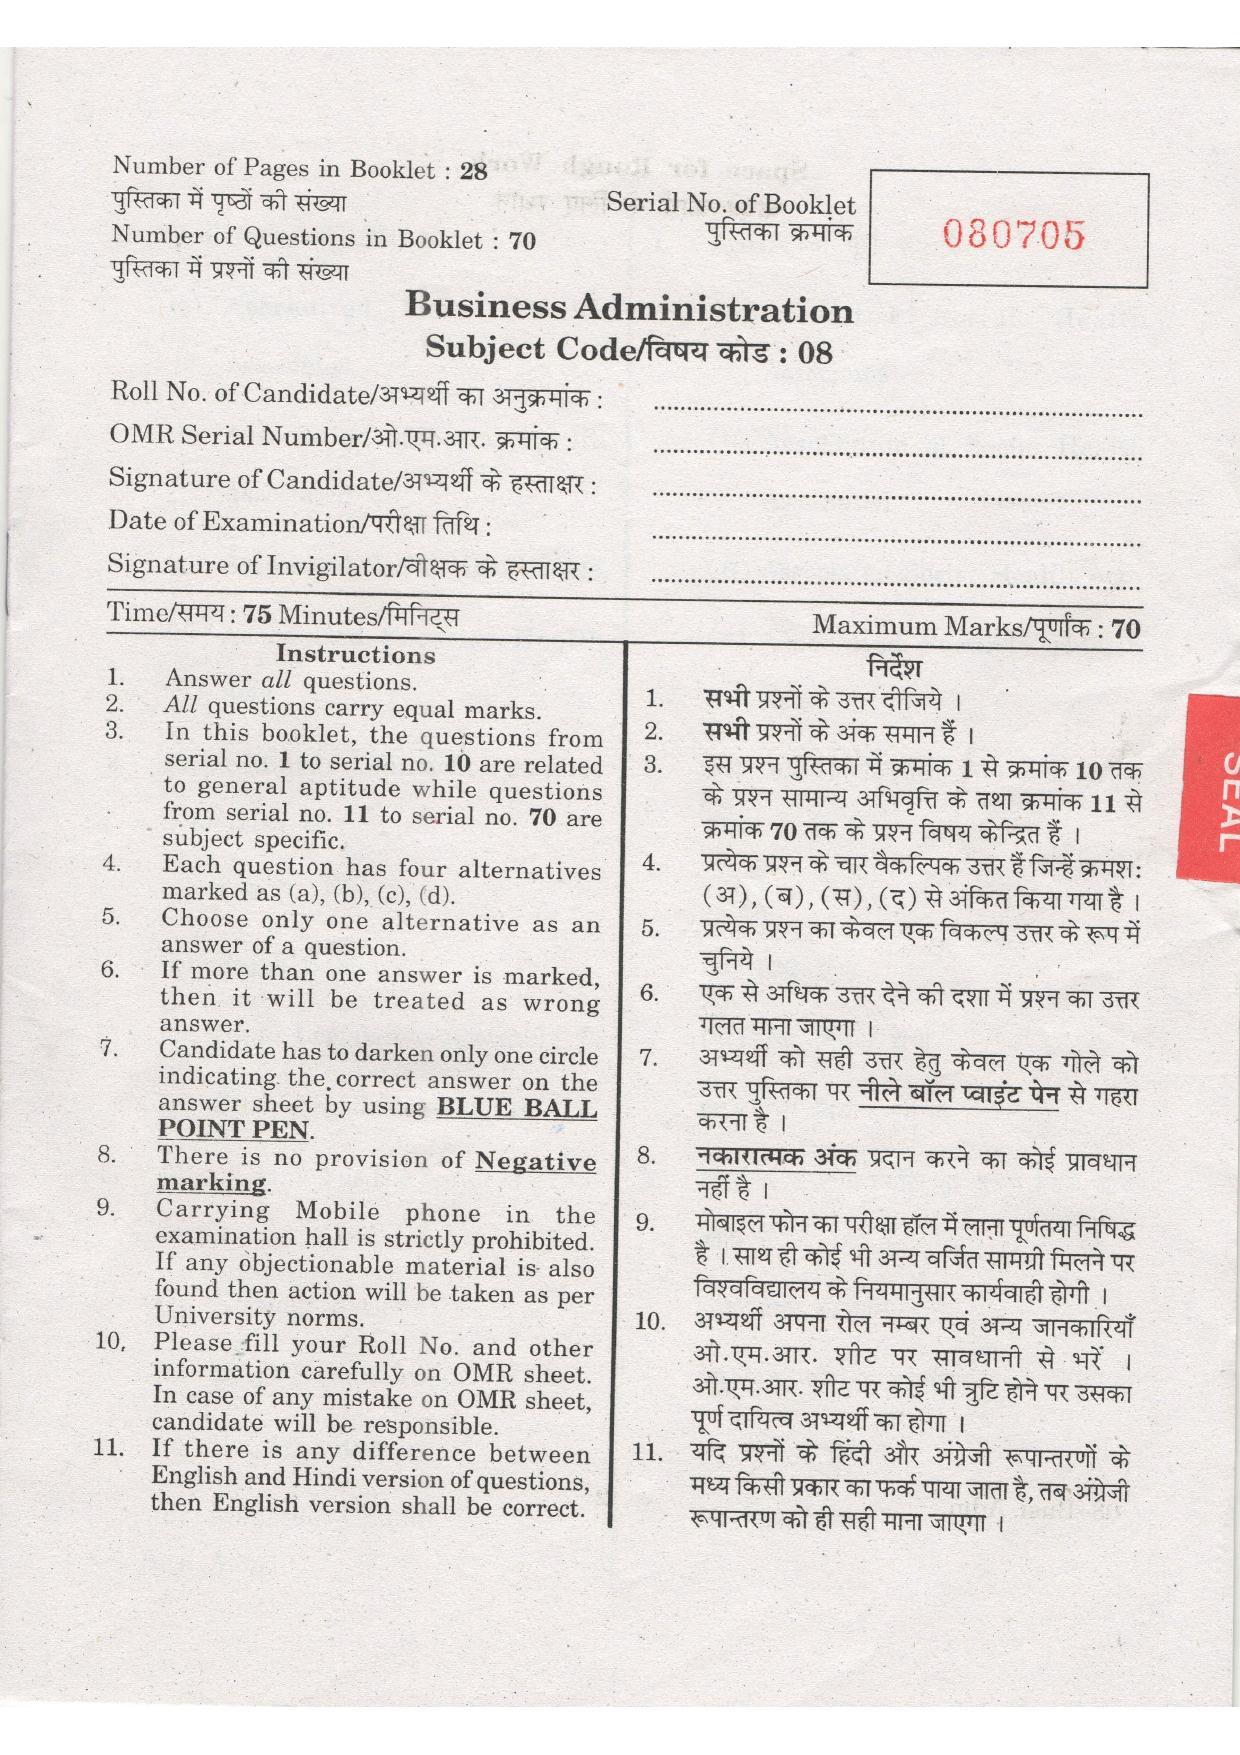 URATPG Business admin 2013 Question Paper - Page 1